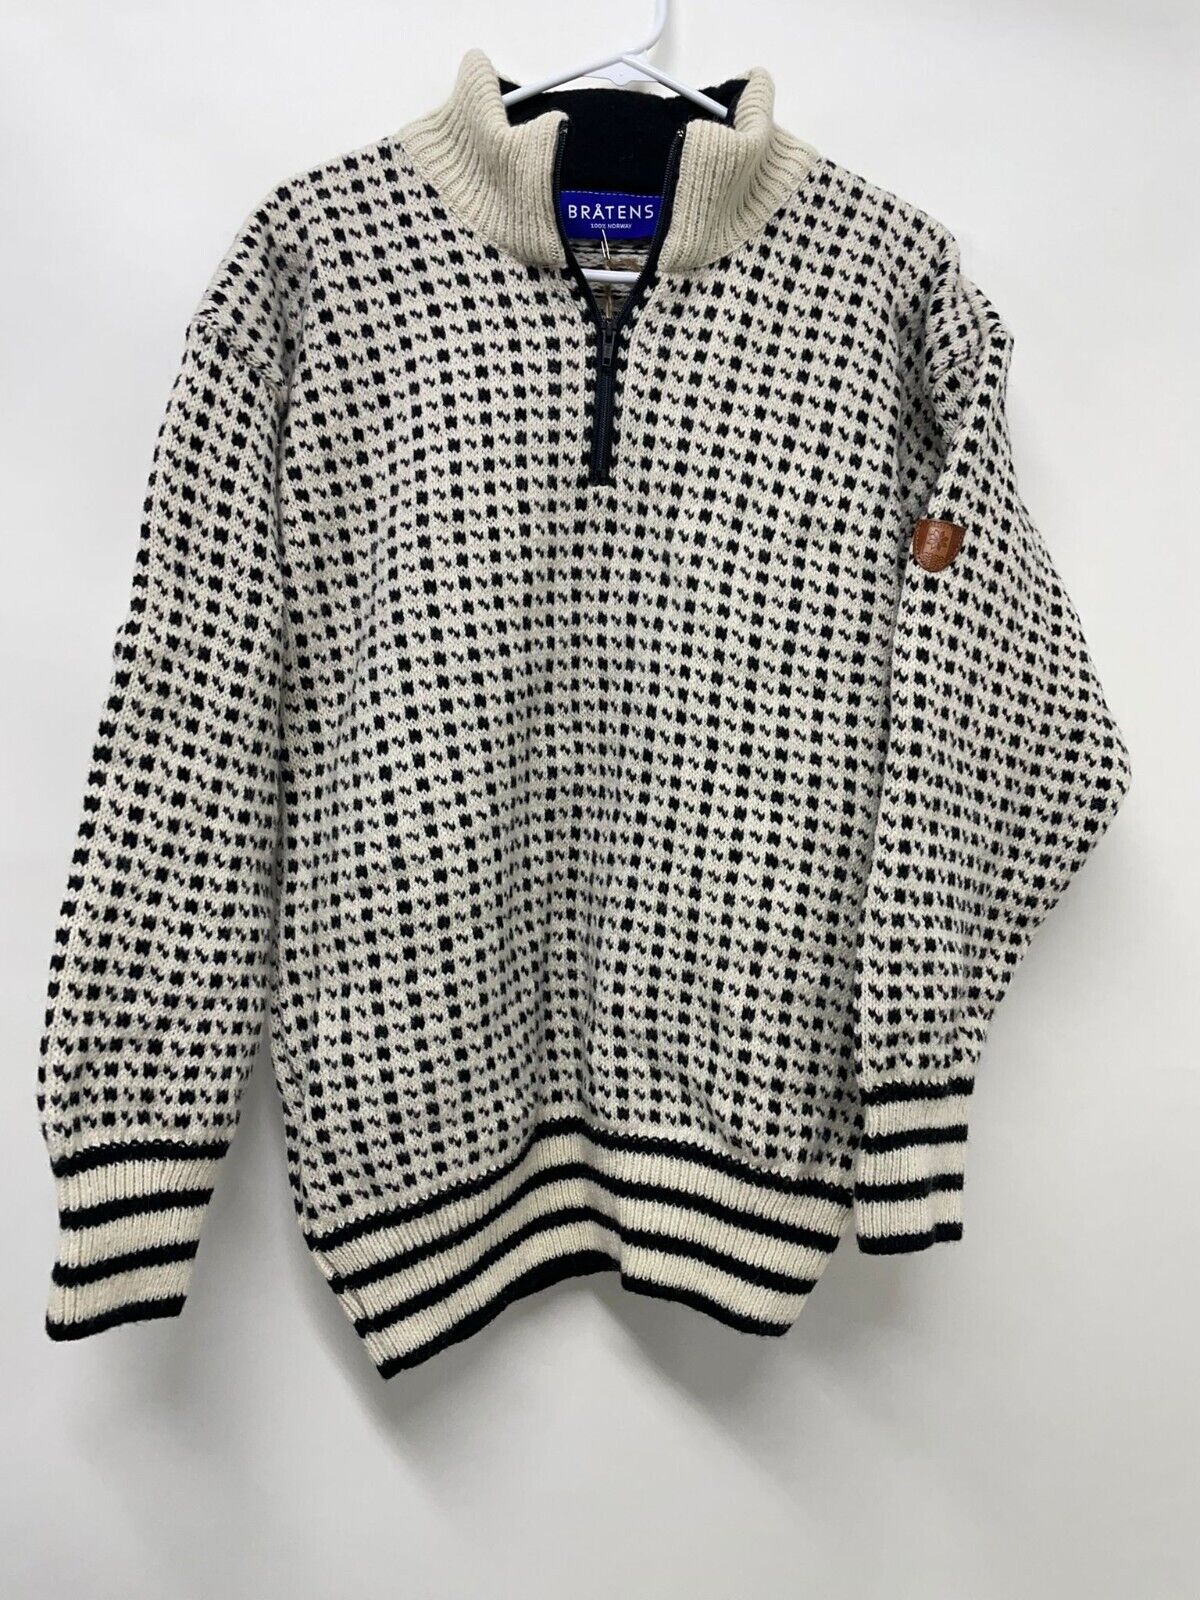 Bratens Adult S White Black Islender Quarter Zip Sweater Norway Wool Pullover